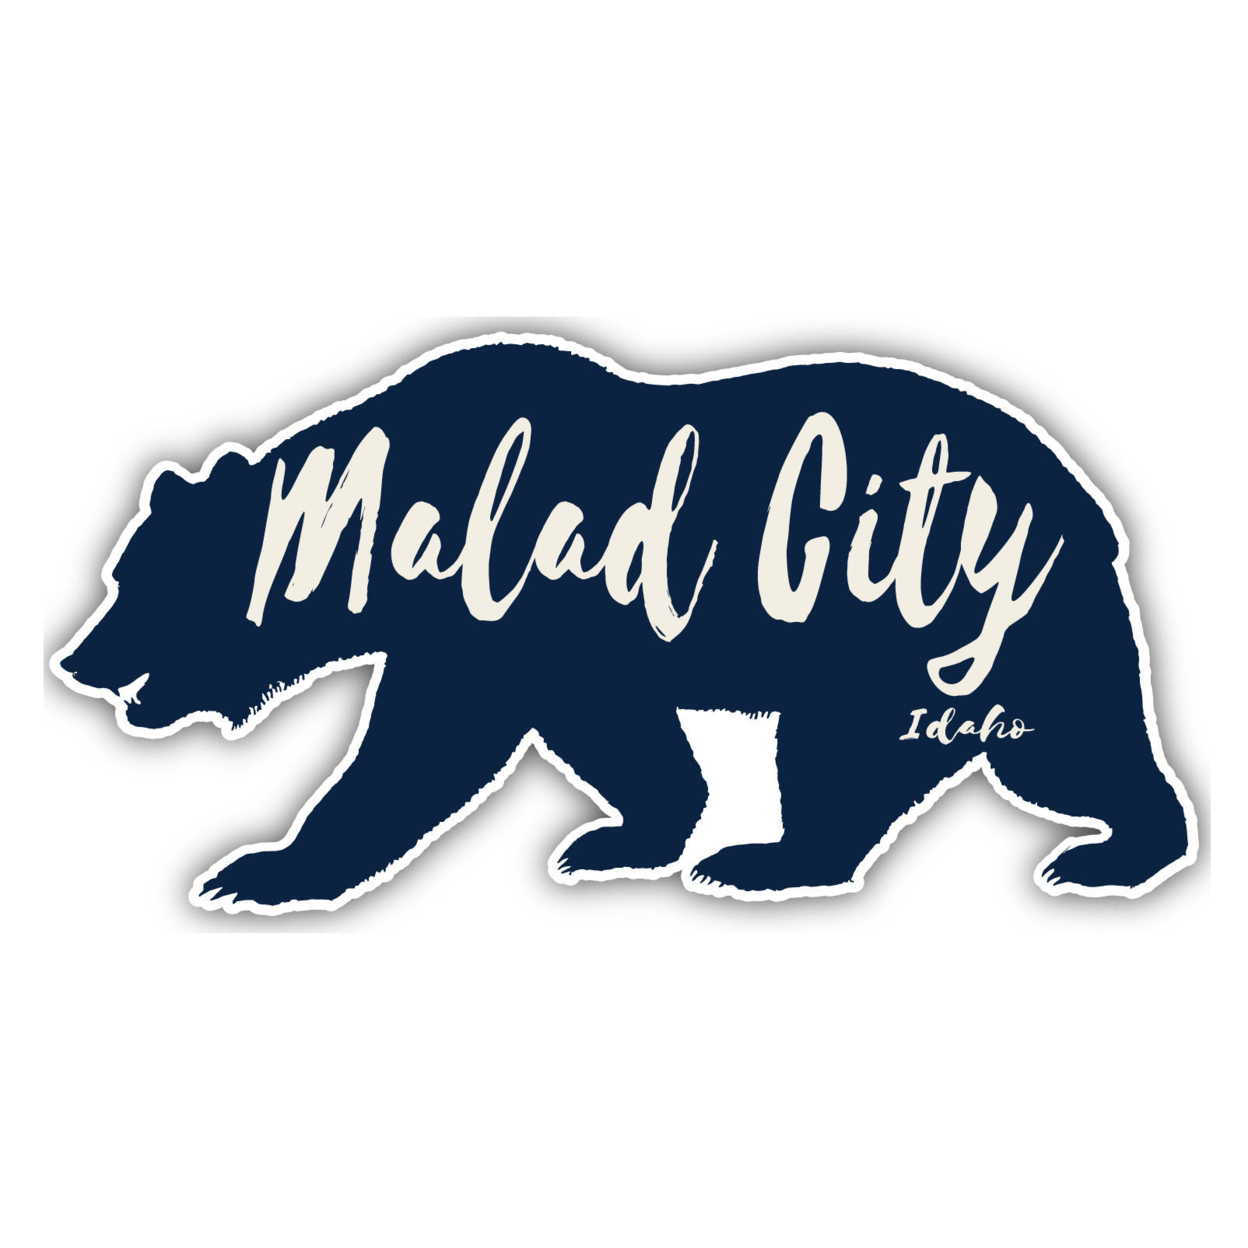 Malad City Idaho Souvenir Decorative Stickers (Choose Theme And Size) - 2-Inch, Tent